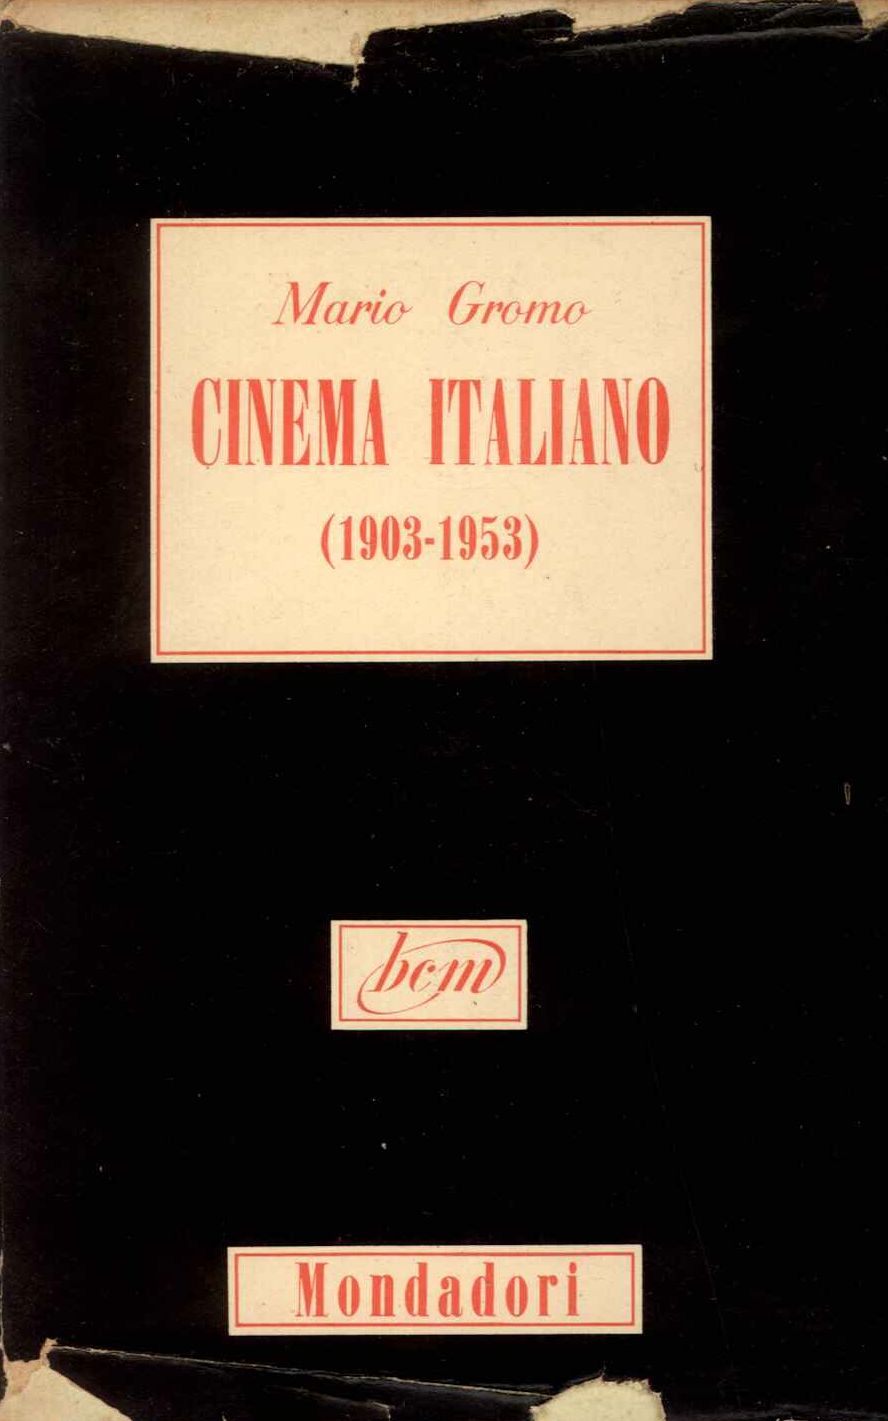 Cinema italiano (1903-1953)